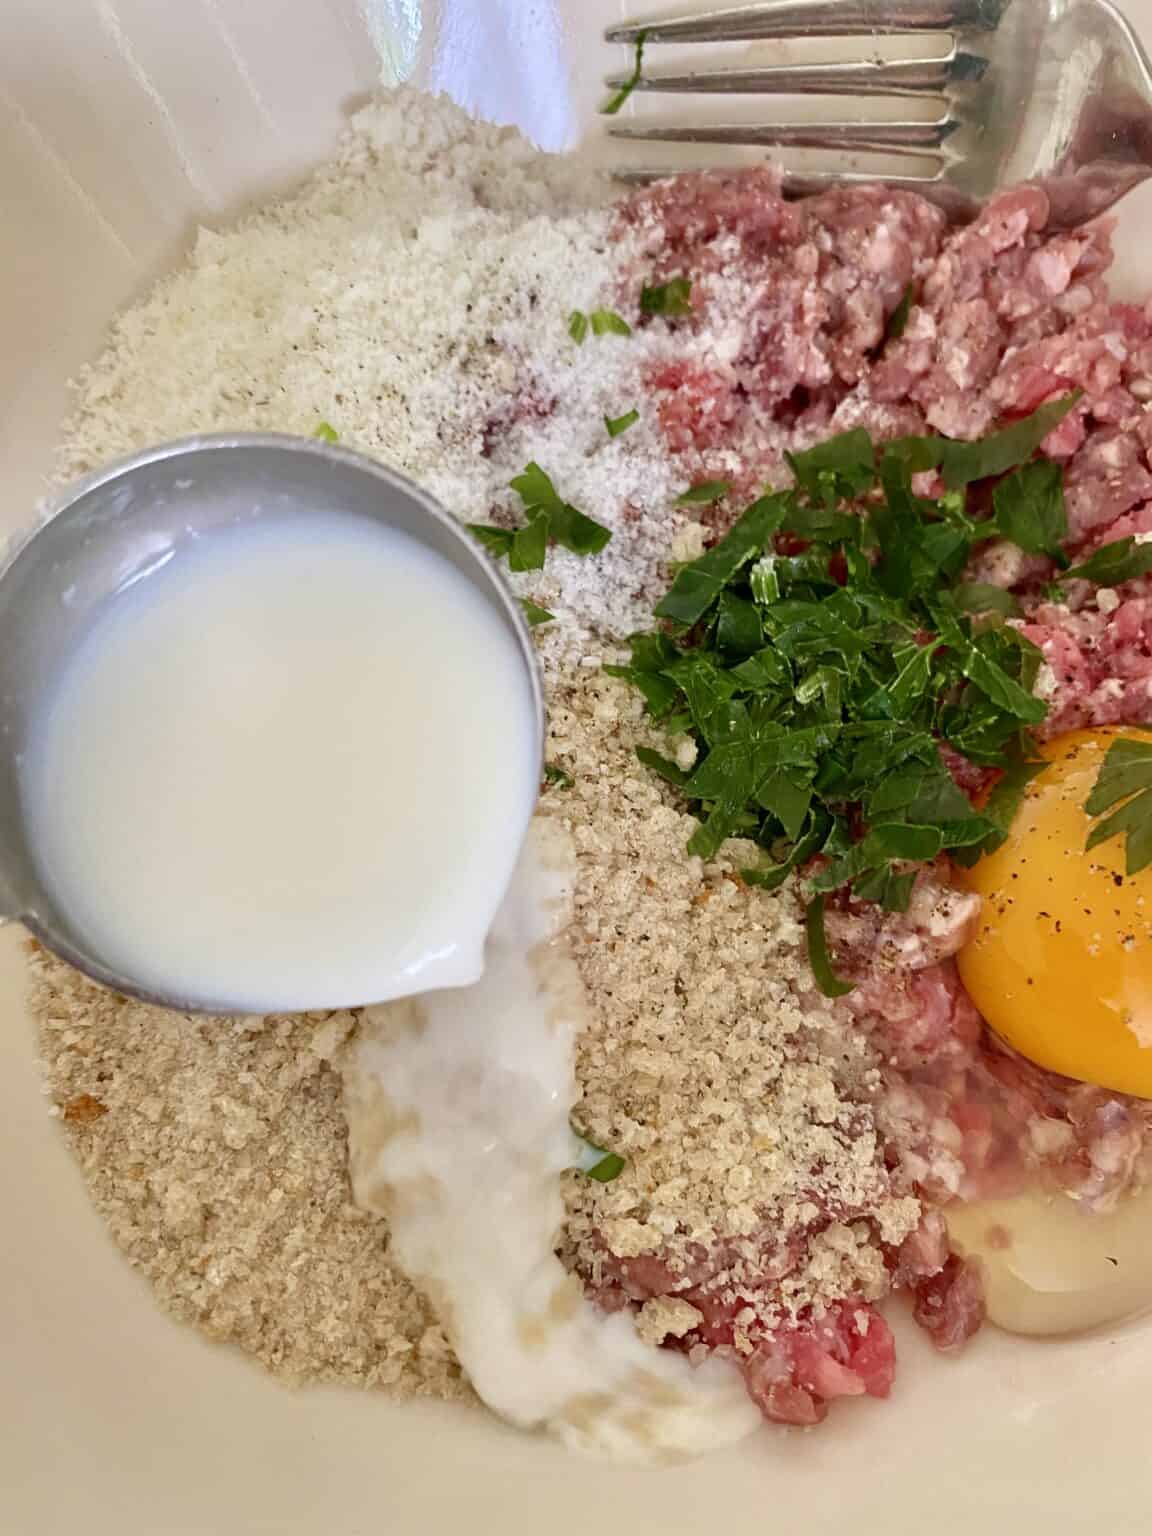 Italian Wedding Soup Recipe with Little Meatballs - Christina's Cucina